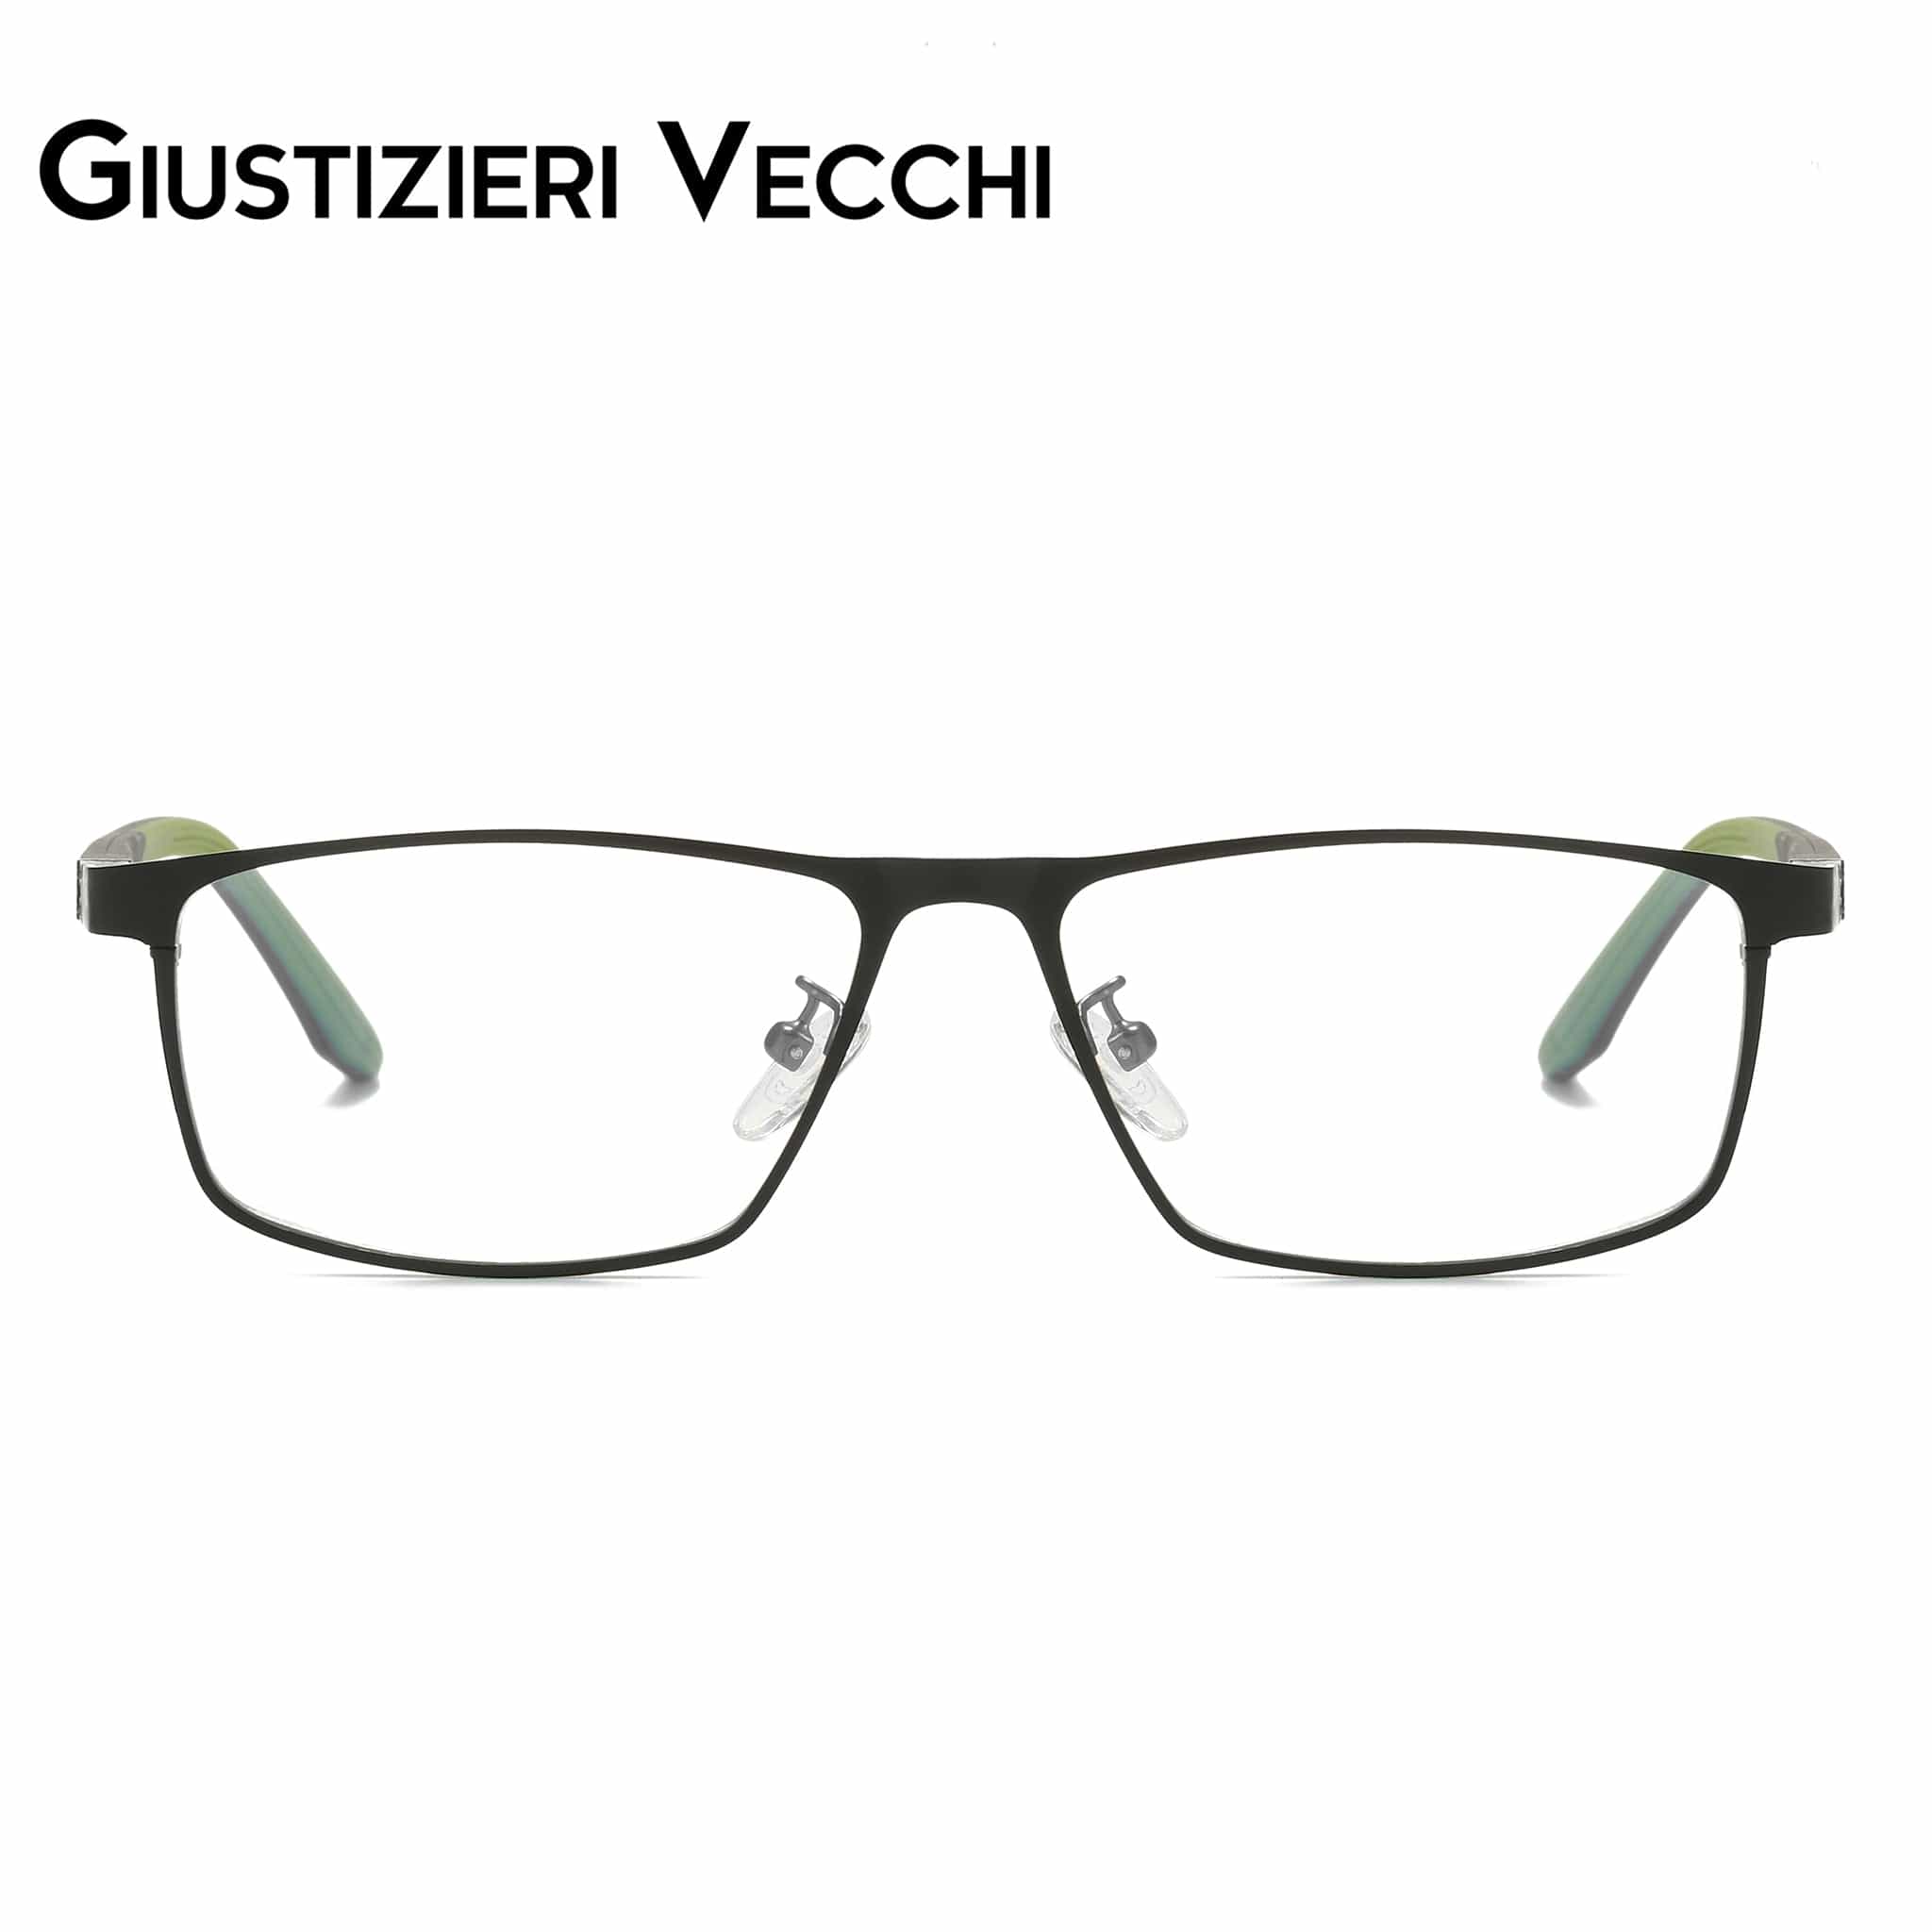 GIUSTIZIERI VECCHI Eyeglasses Large / Grey with Green IceStorm Duo